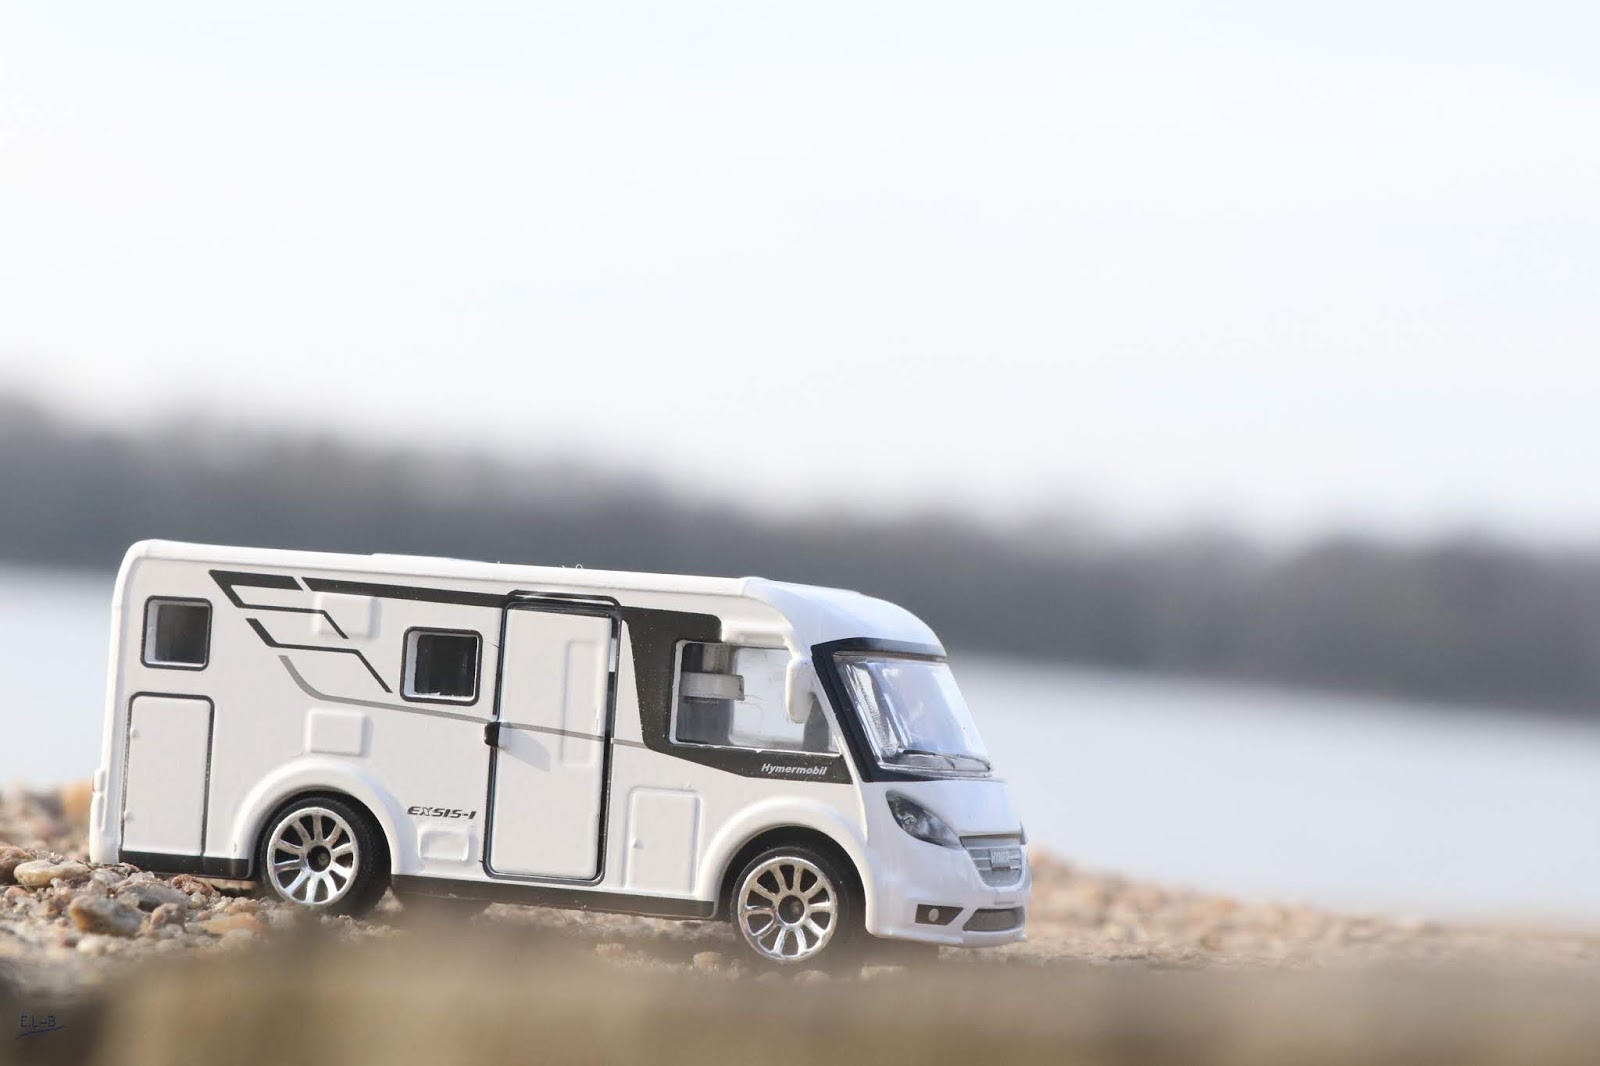 Miniature majorette camping car hymer - Majorette